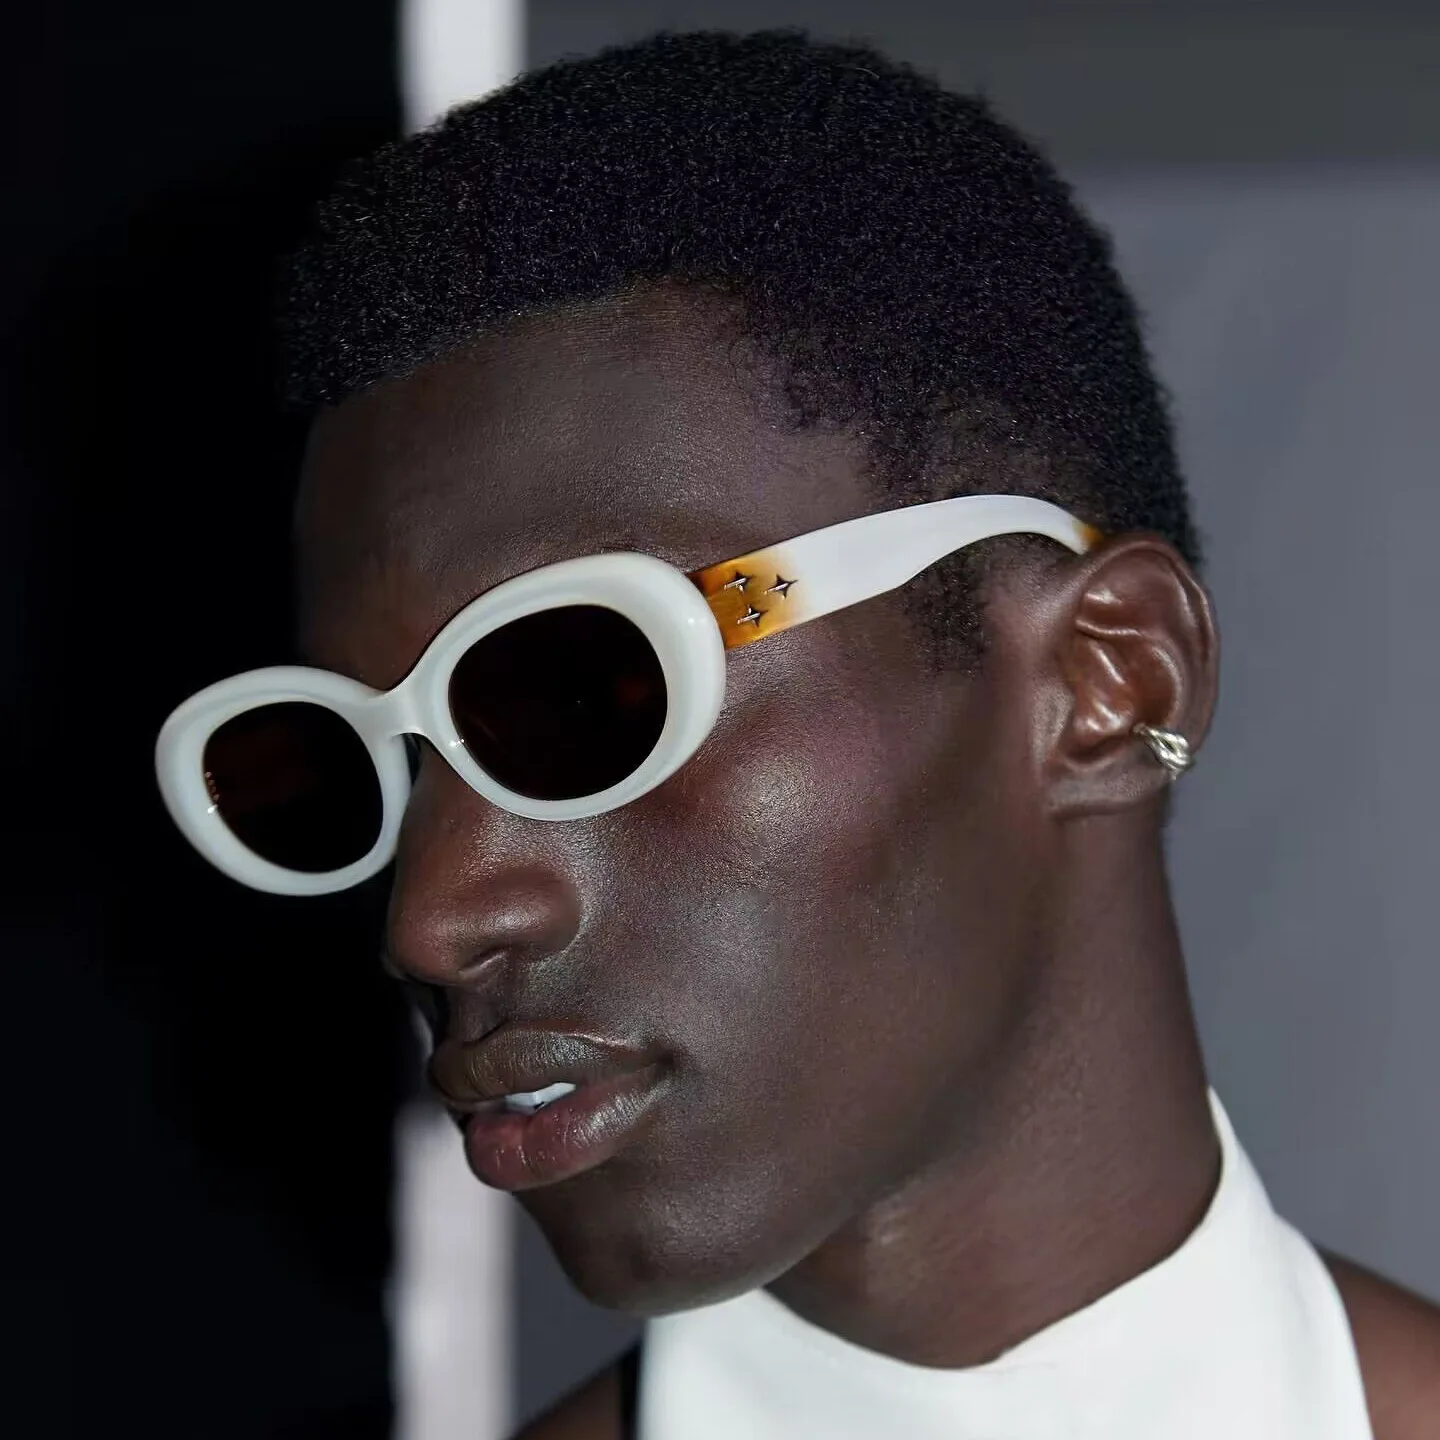 Retro Oval Óculos de sol das Mulheres os Homens Punk Óculos Y2K Acessórios Estrelas Rebite Óculos Feminino Tons Marca de Luxo Proteção UV Gafas